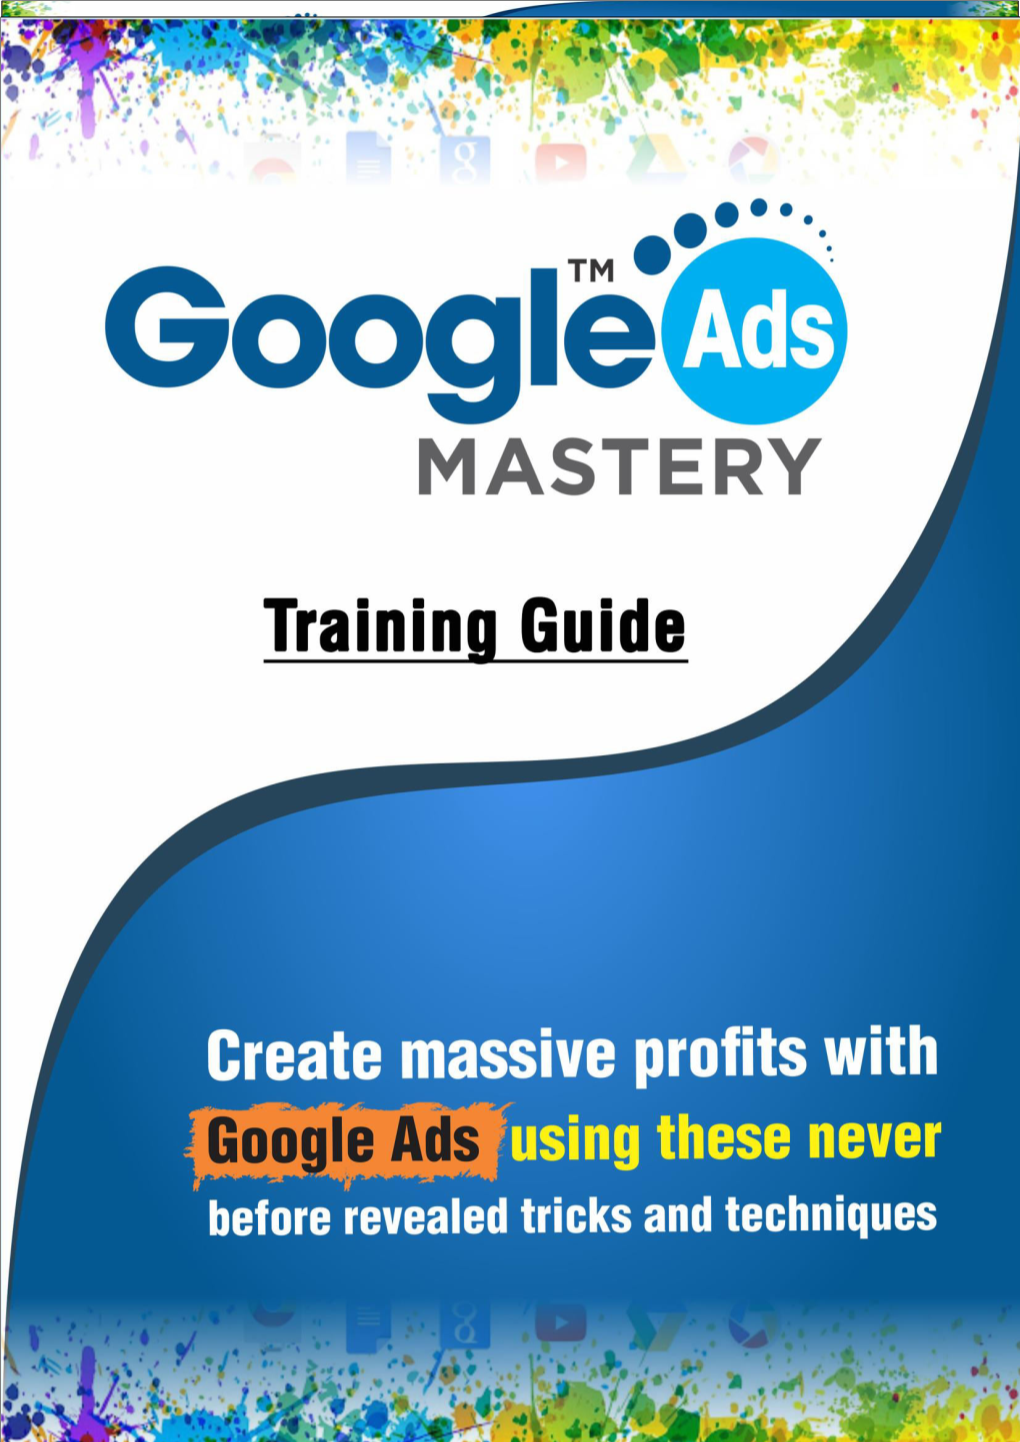 Grab This Google Ads Mastery HD Training Video